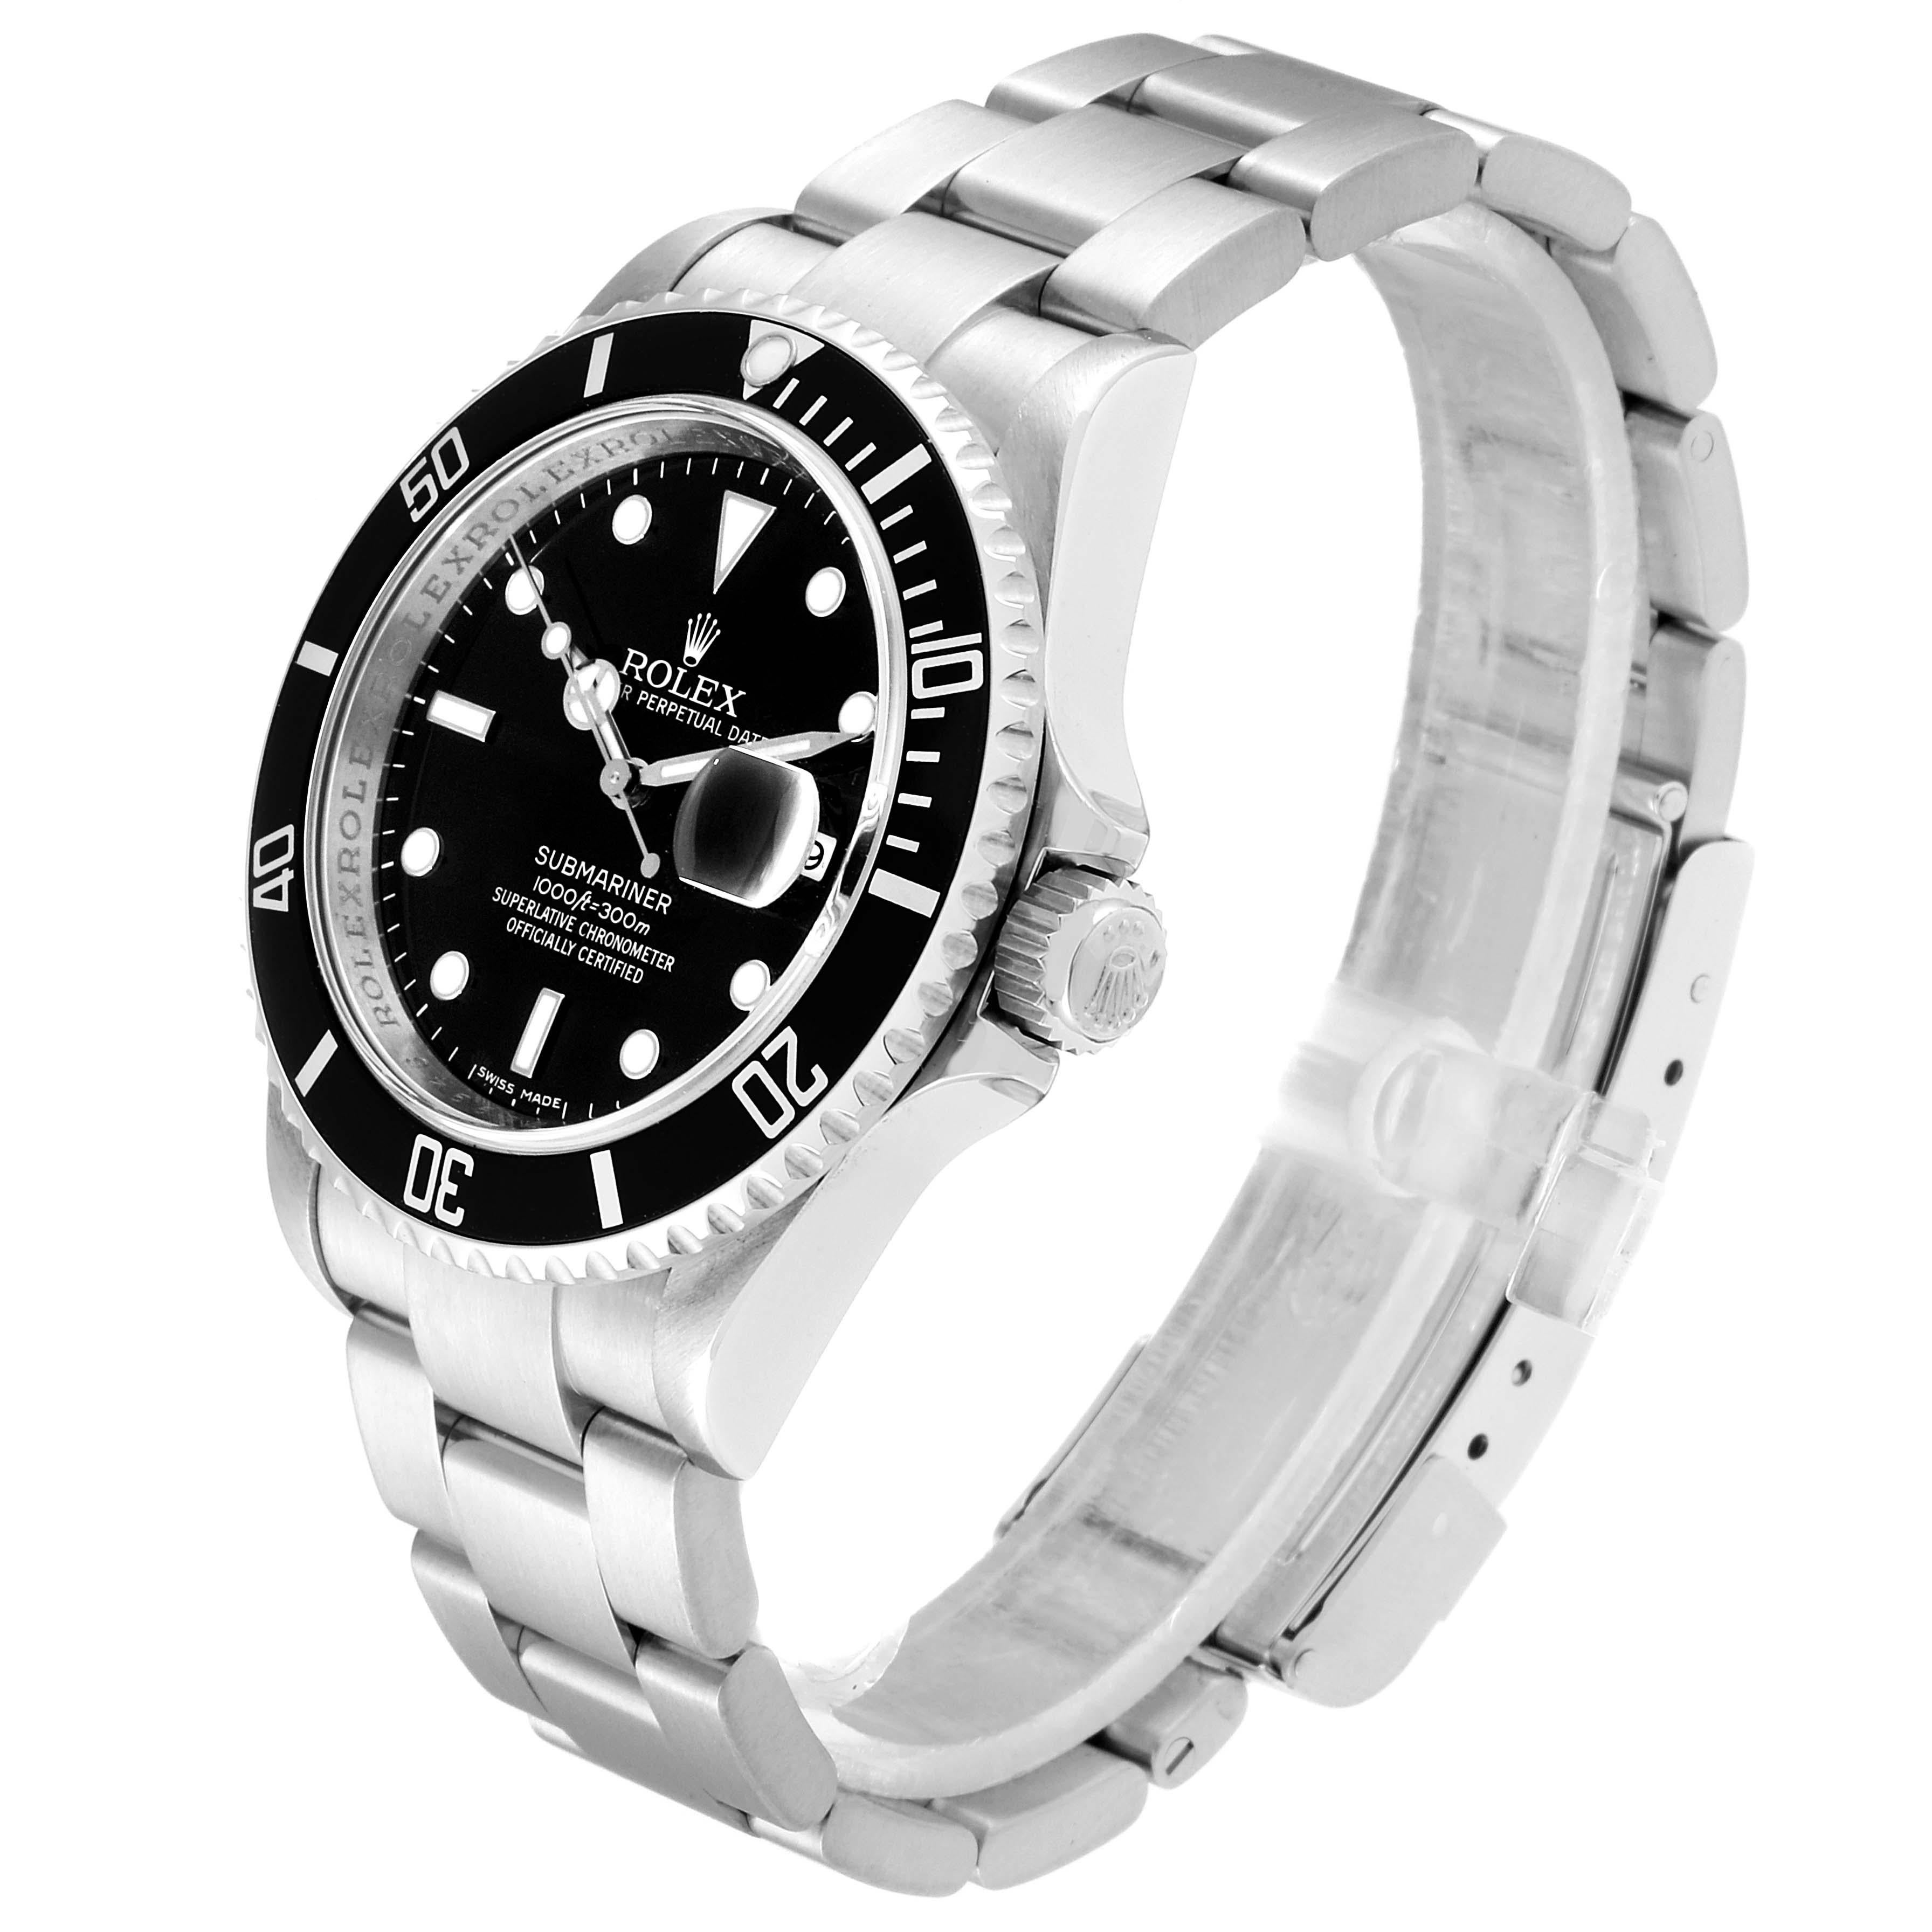 Rolex Submariner Date Stainless Steel Men's Watch 16610 Box Card 1